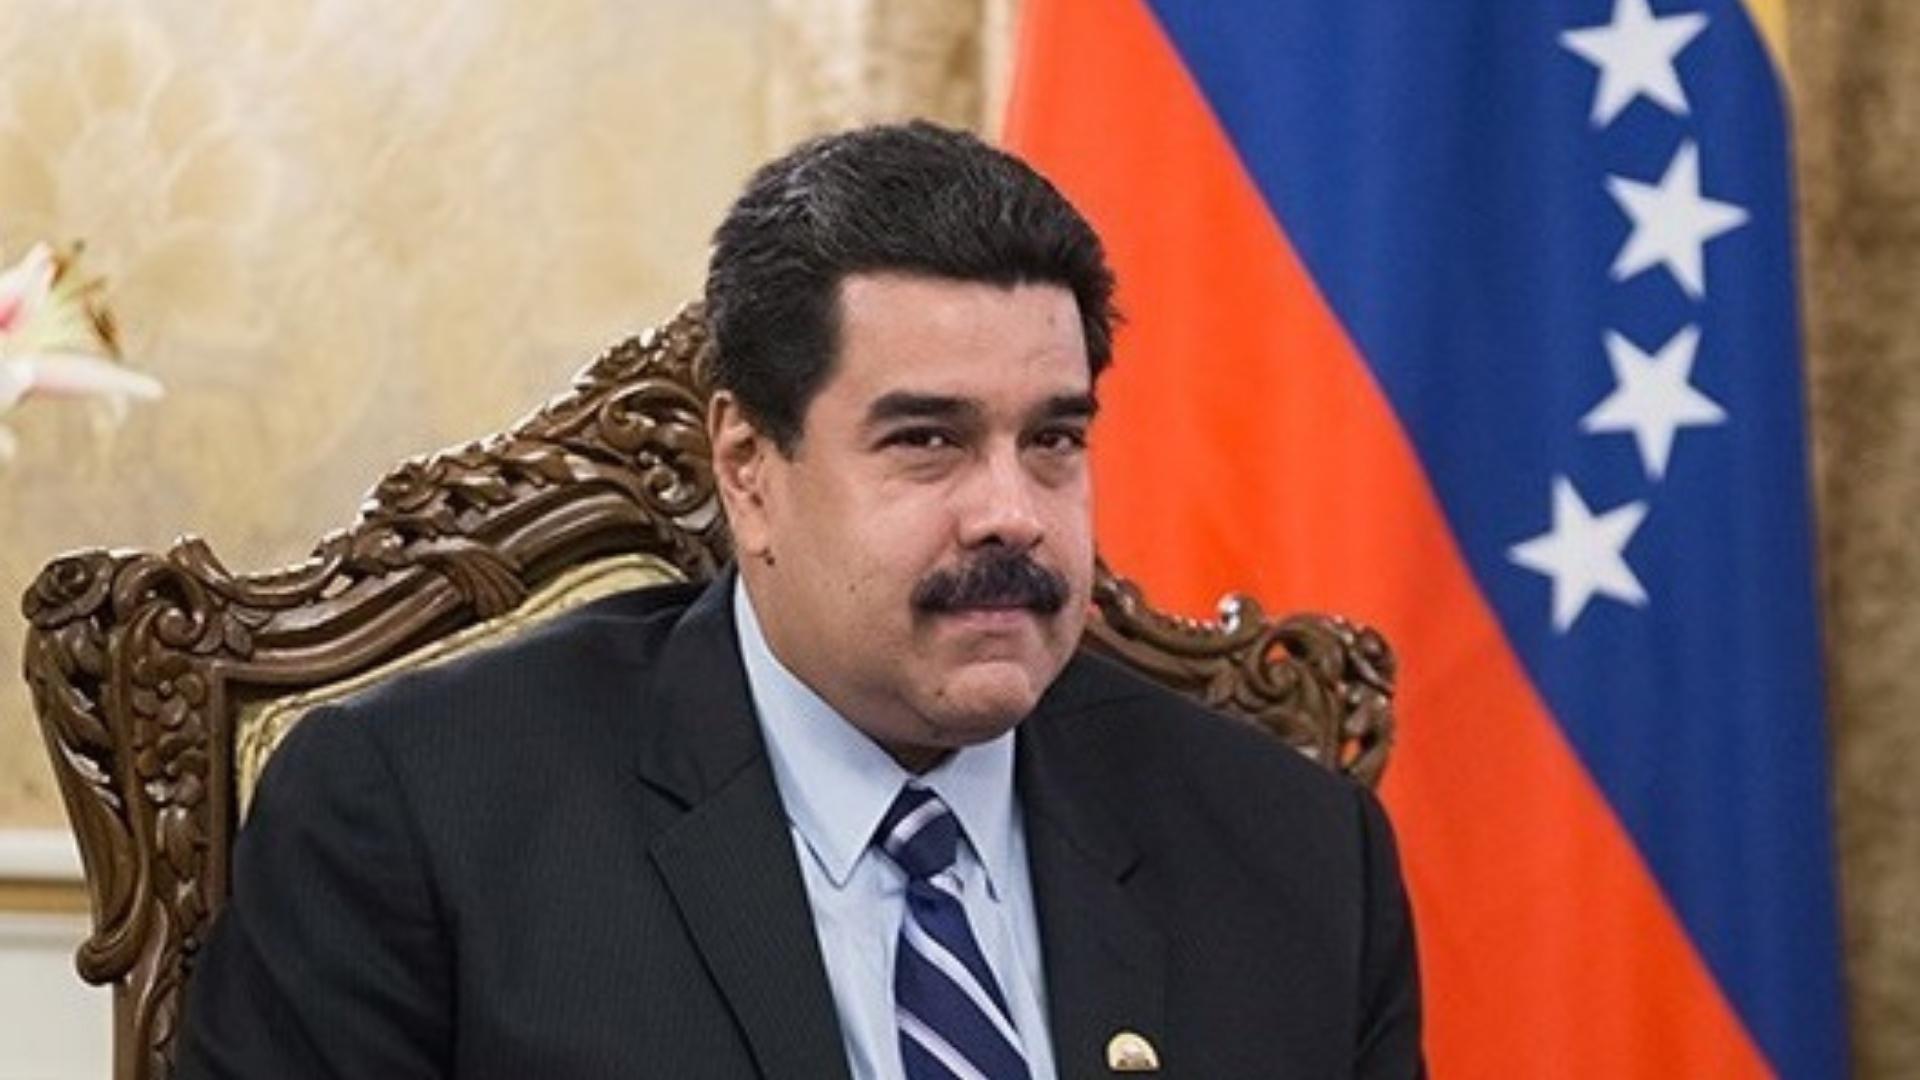 Nicolás Maduro, dictador de Venezuela. Foto: Hossein Zohrevand